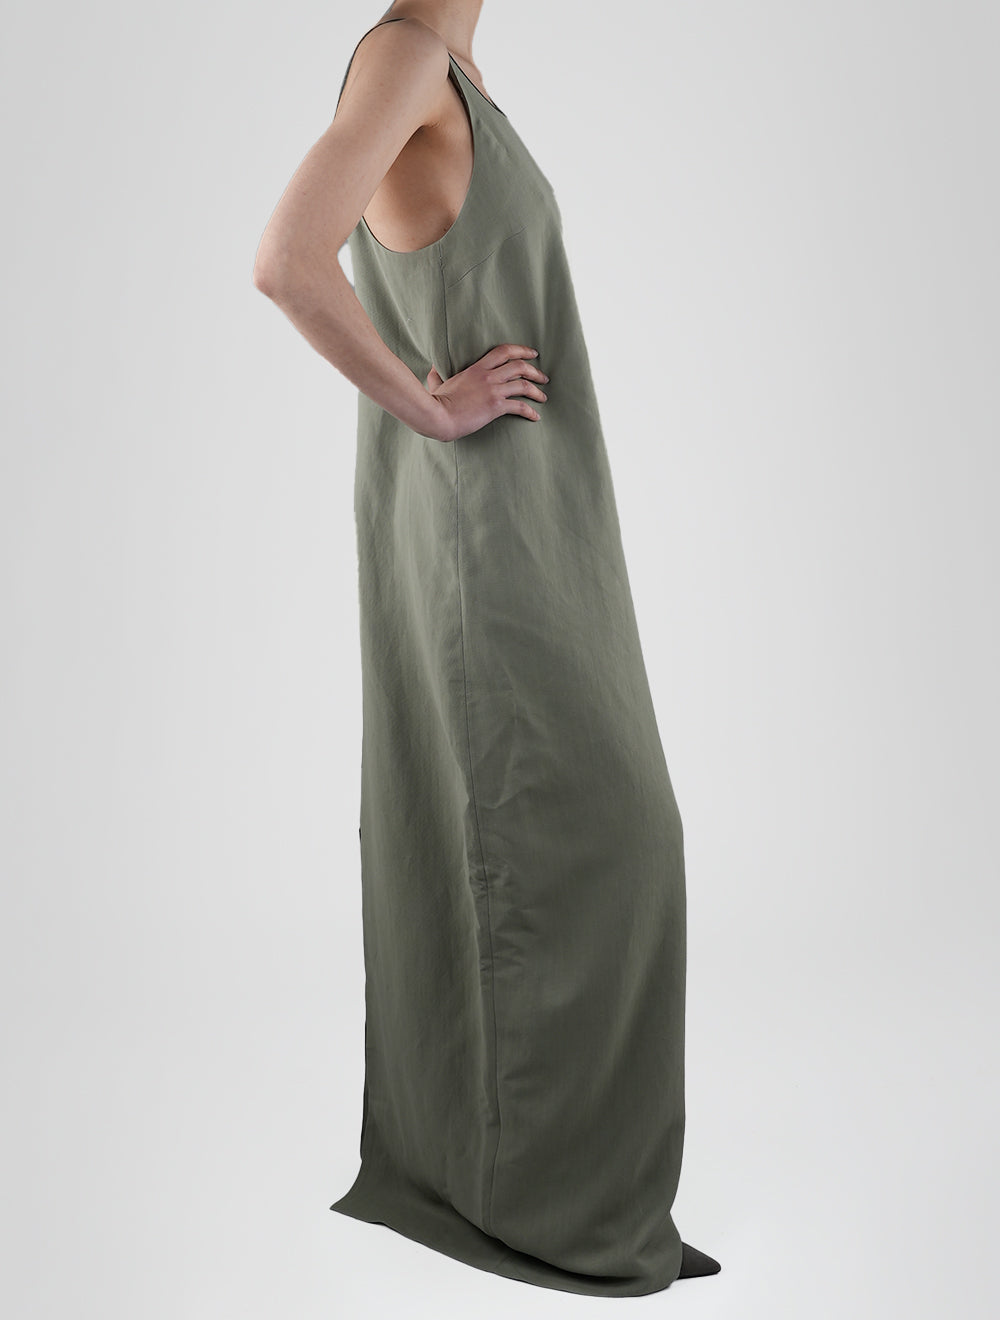 Brunello Cucinelli groene viscose linnen jurk vrouw 